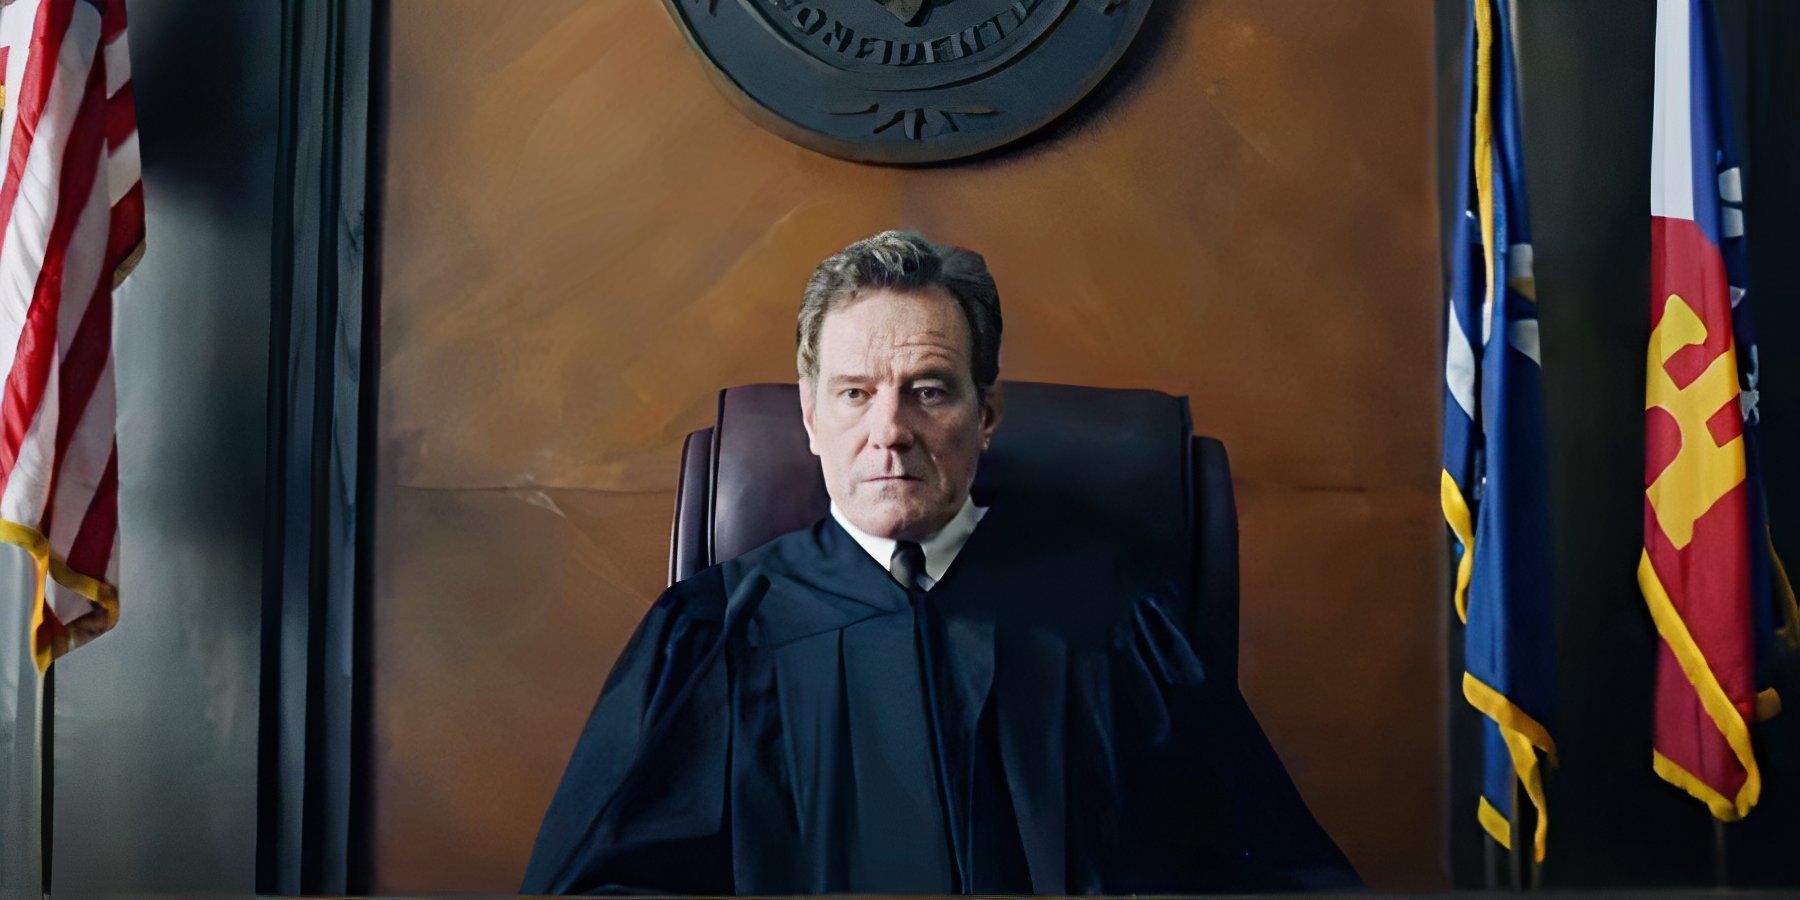 Bryan Cranston as the judge Michael Desiato in Your Honor